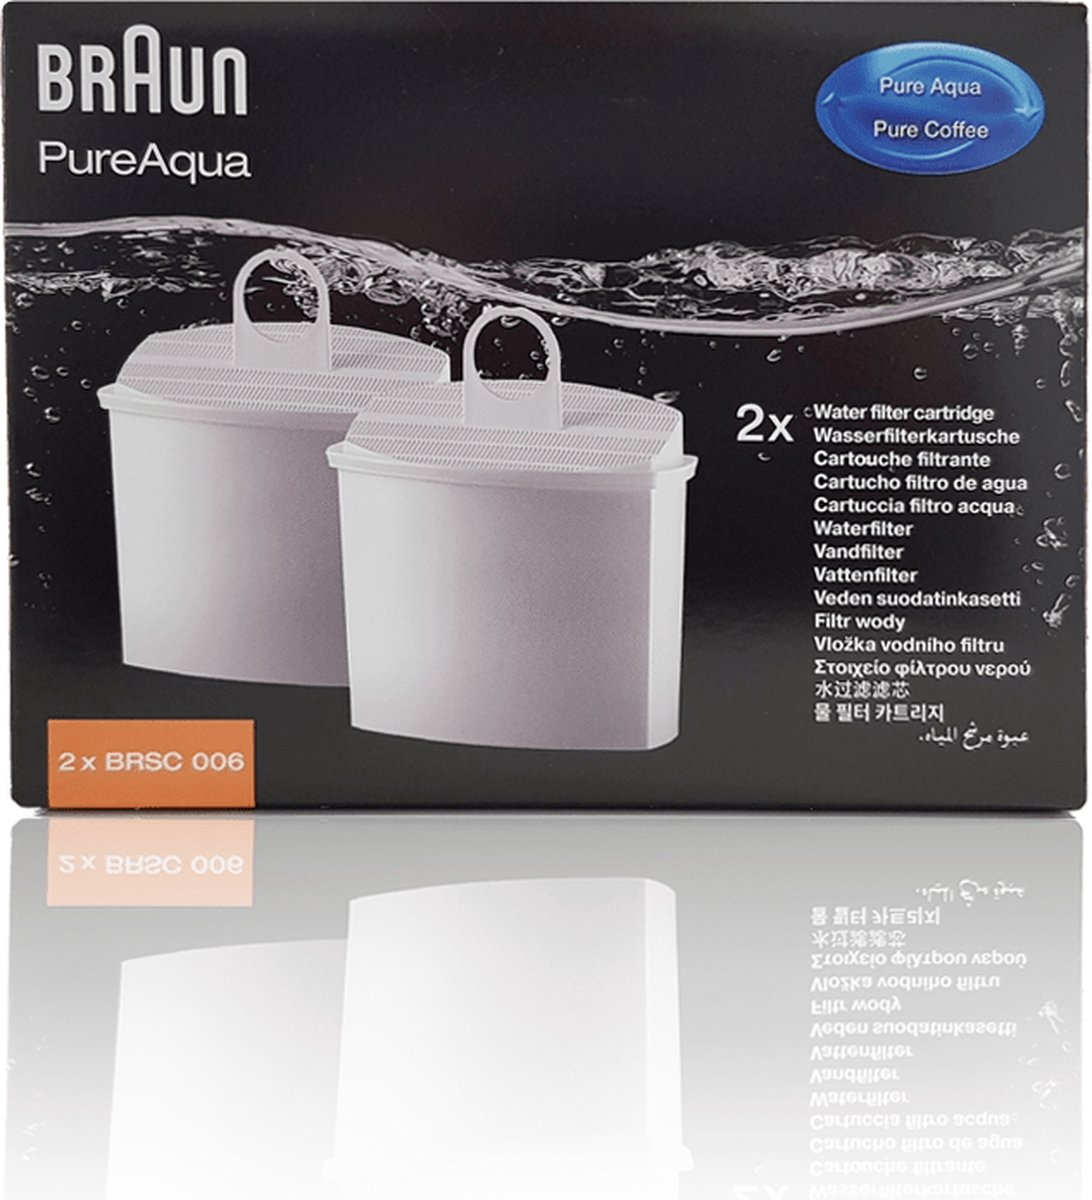 Braun BRSC006 - Waterfilter voor koffiemachines | bol.com